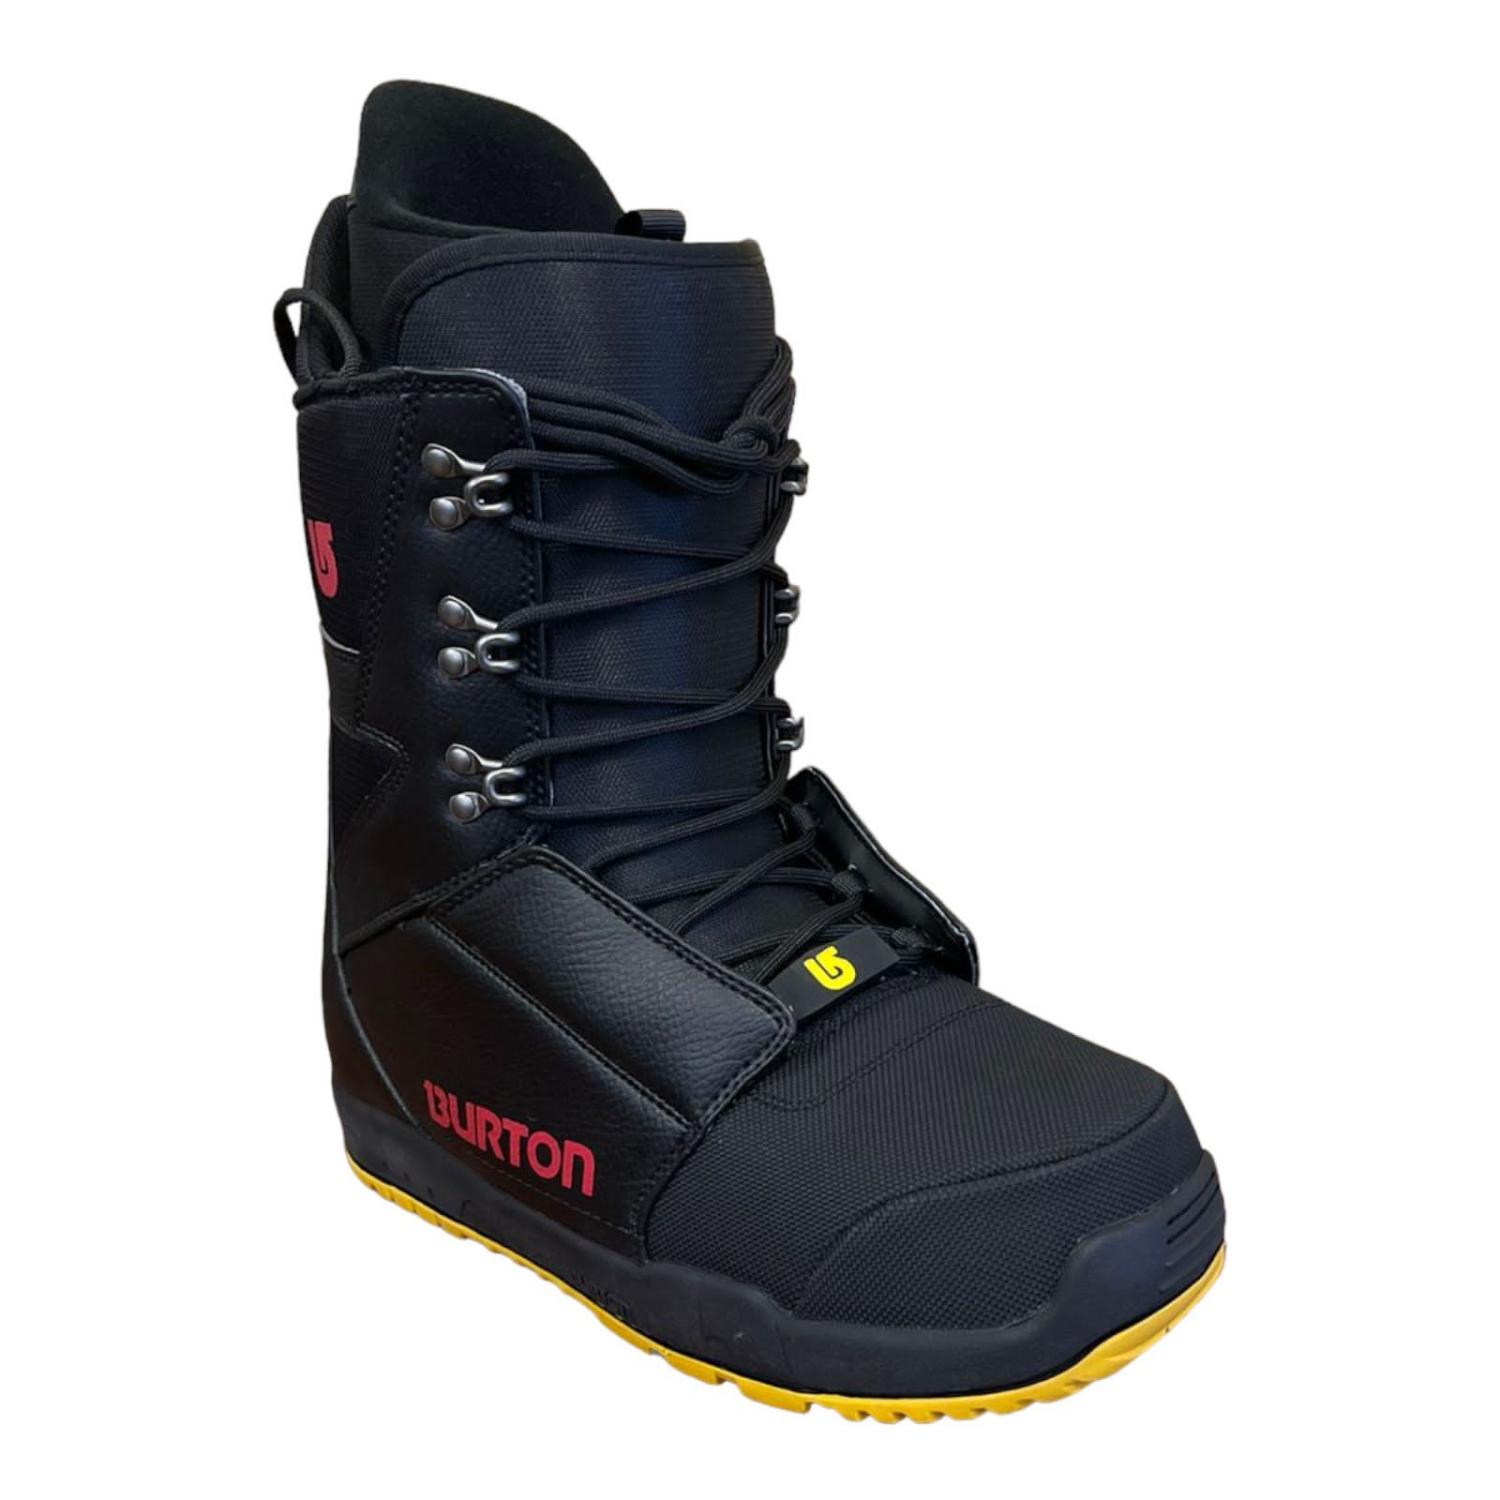 Ботинки сноубордические Burton 22-23 Progression MNS Black/Red ботинки сноубордические burton 21 22 moto boa gray